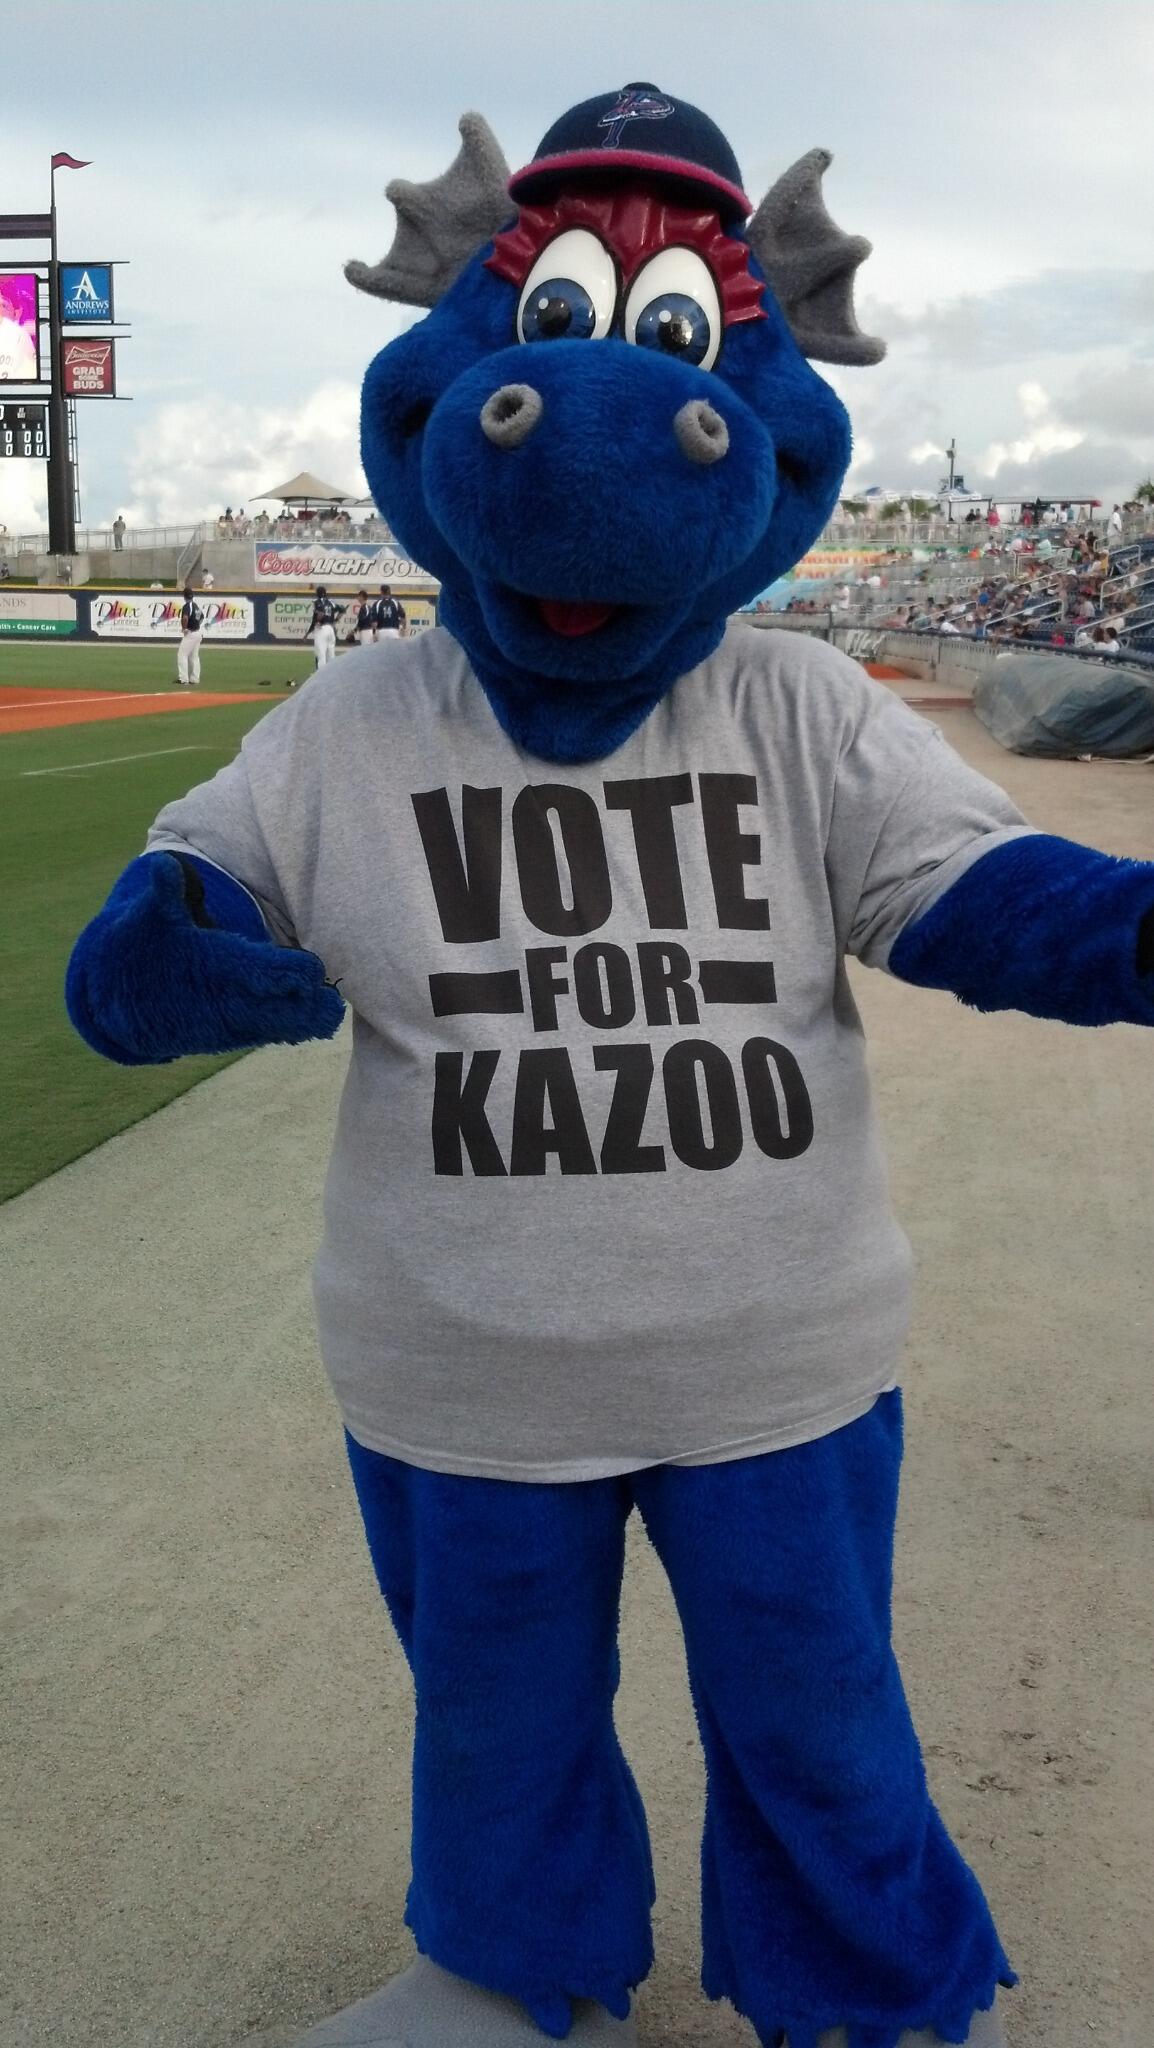 kazoo blue wahoos